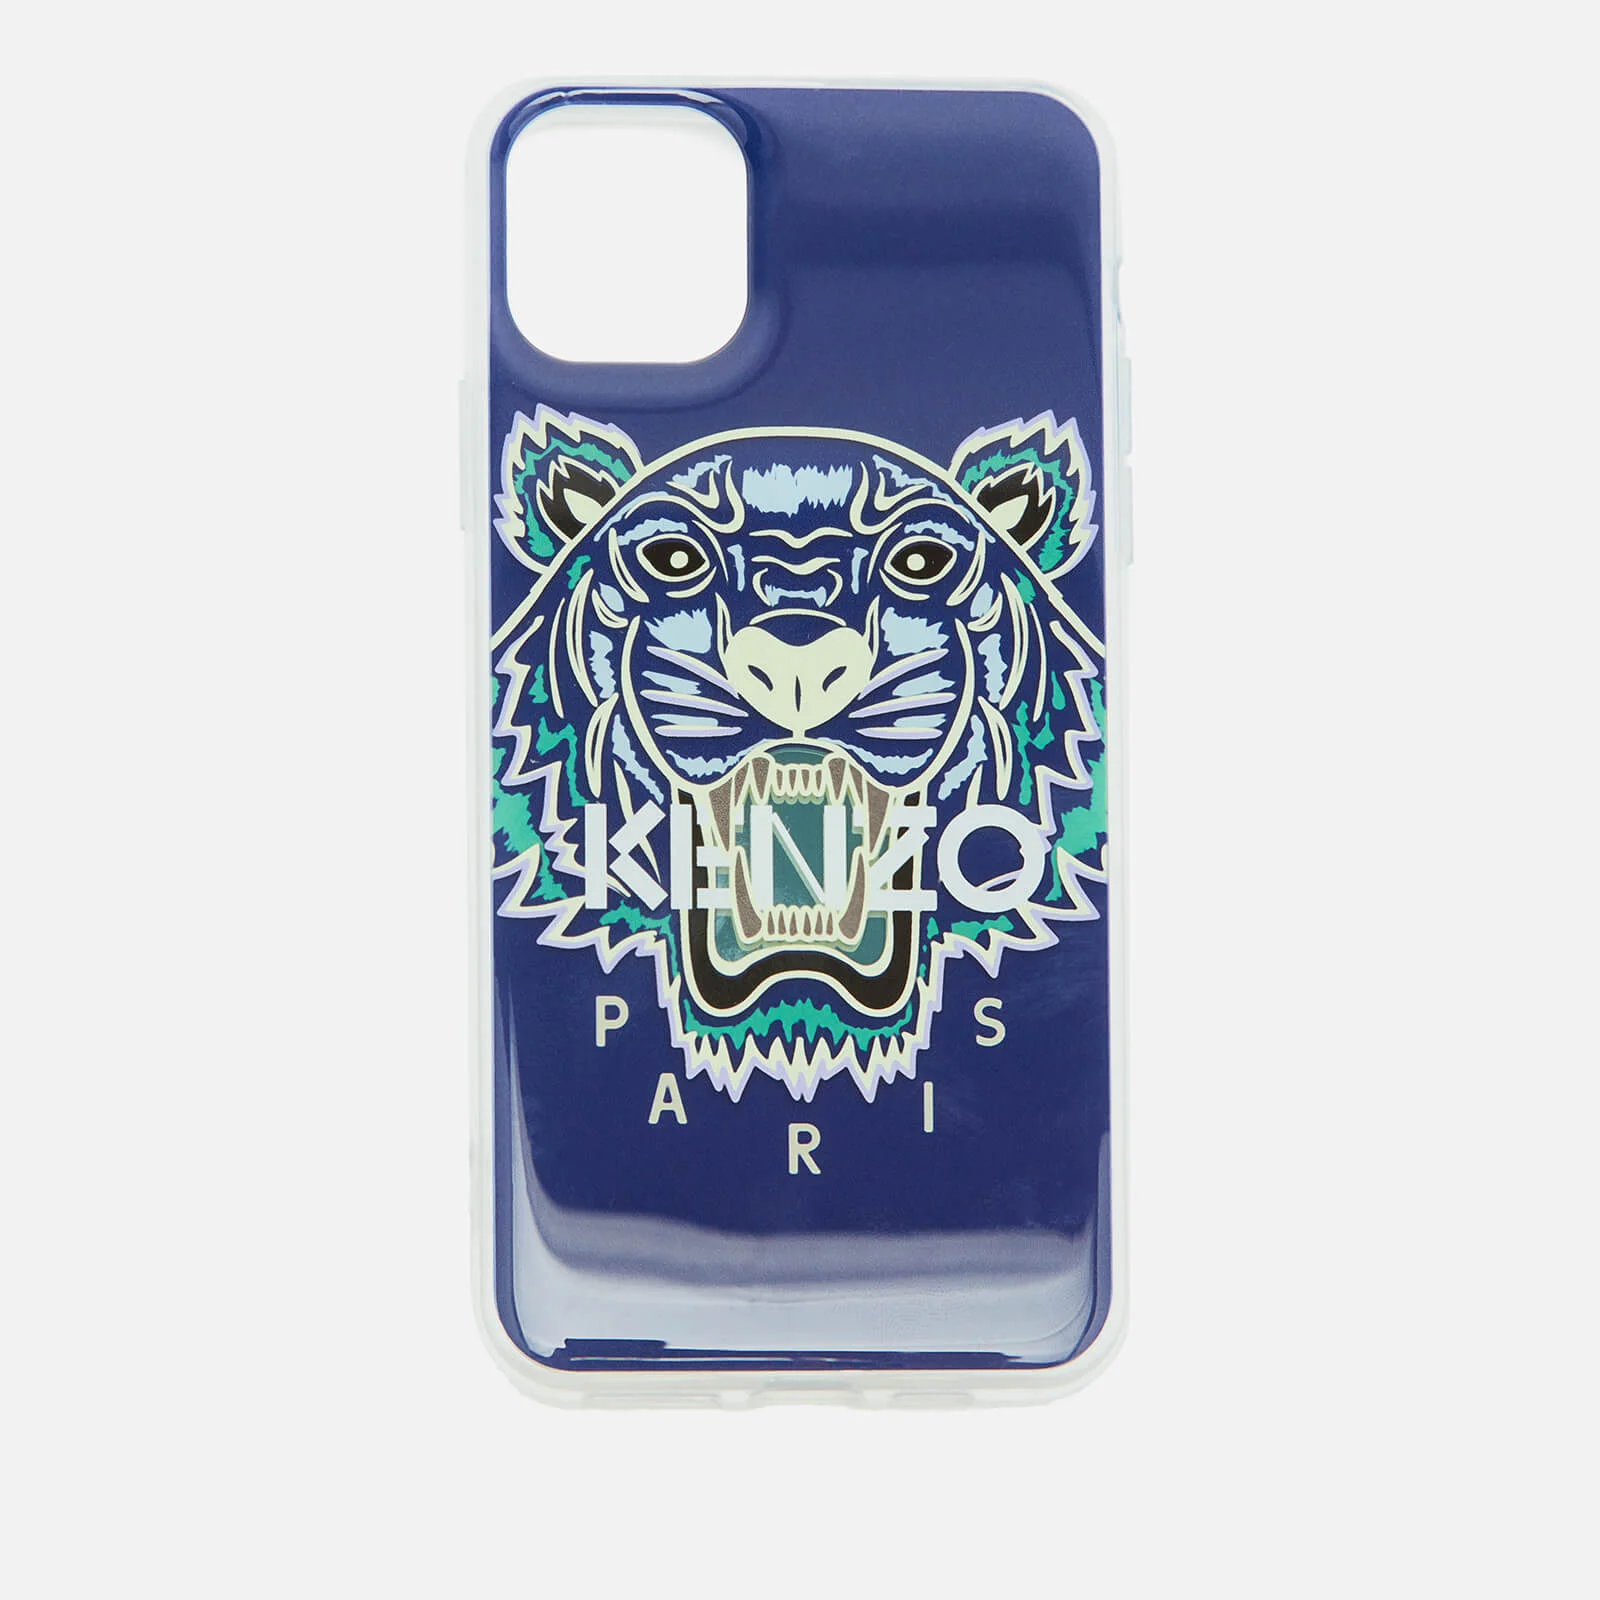 KENZO Men's Tiger iPhone 11 Max Case - Blue Image 1